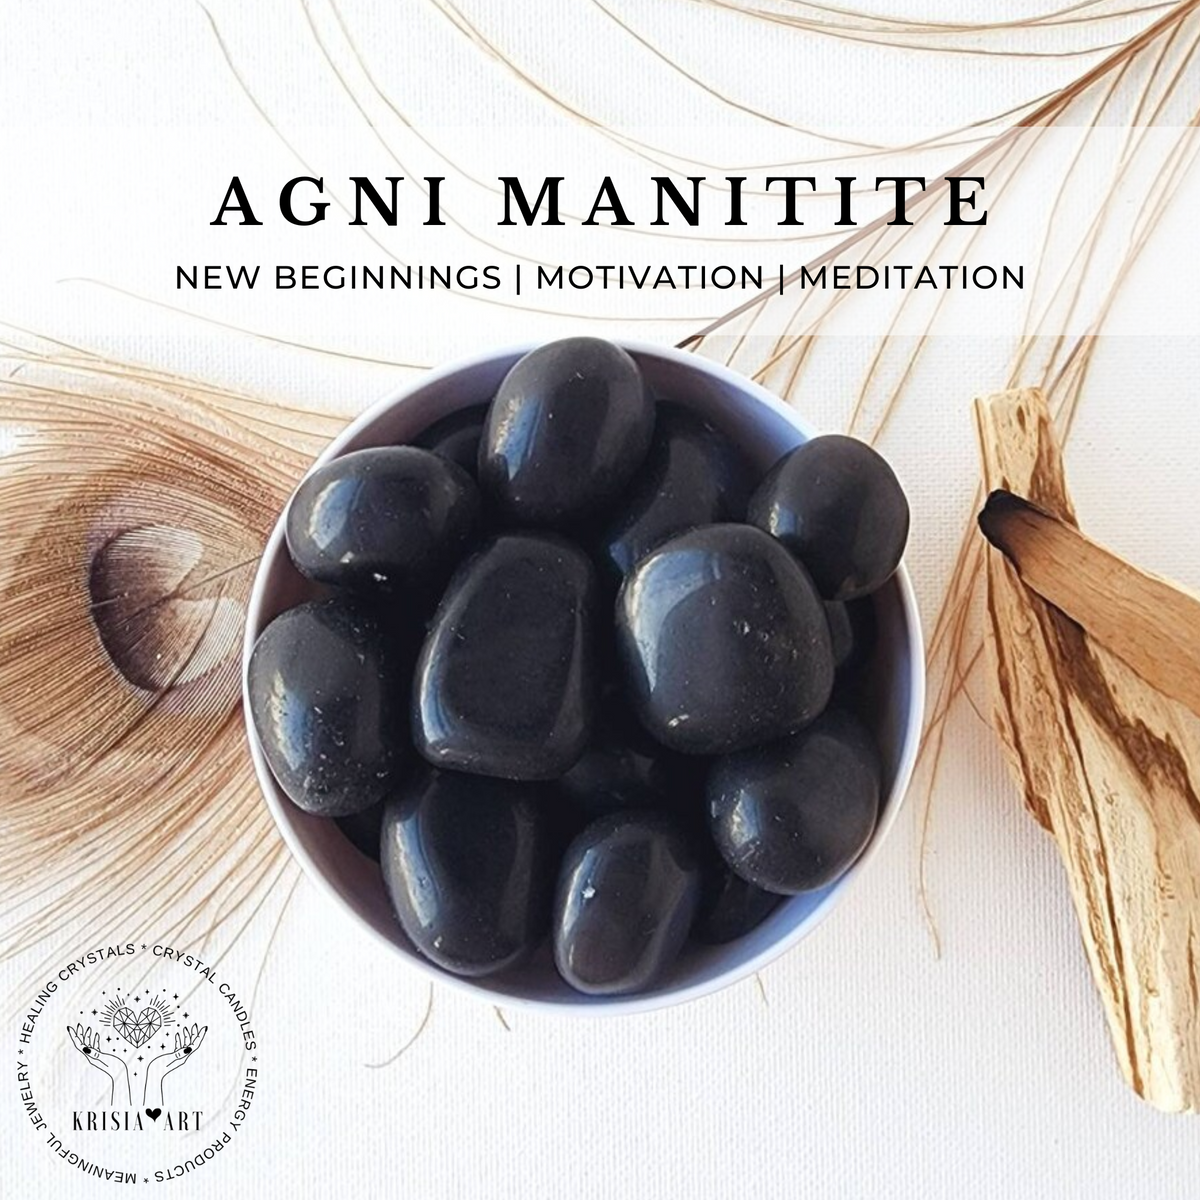 AGNI MANITITE tumbled crystal for new beginnings, motivation, reiki healing, solar plexus chakra meditation